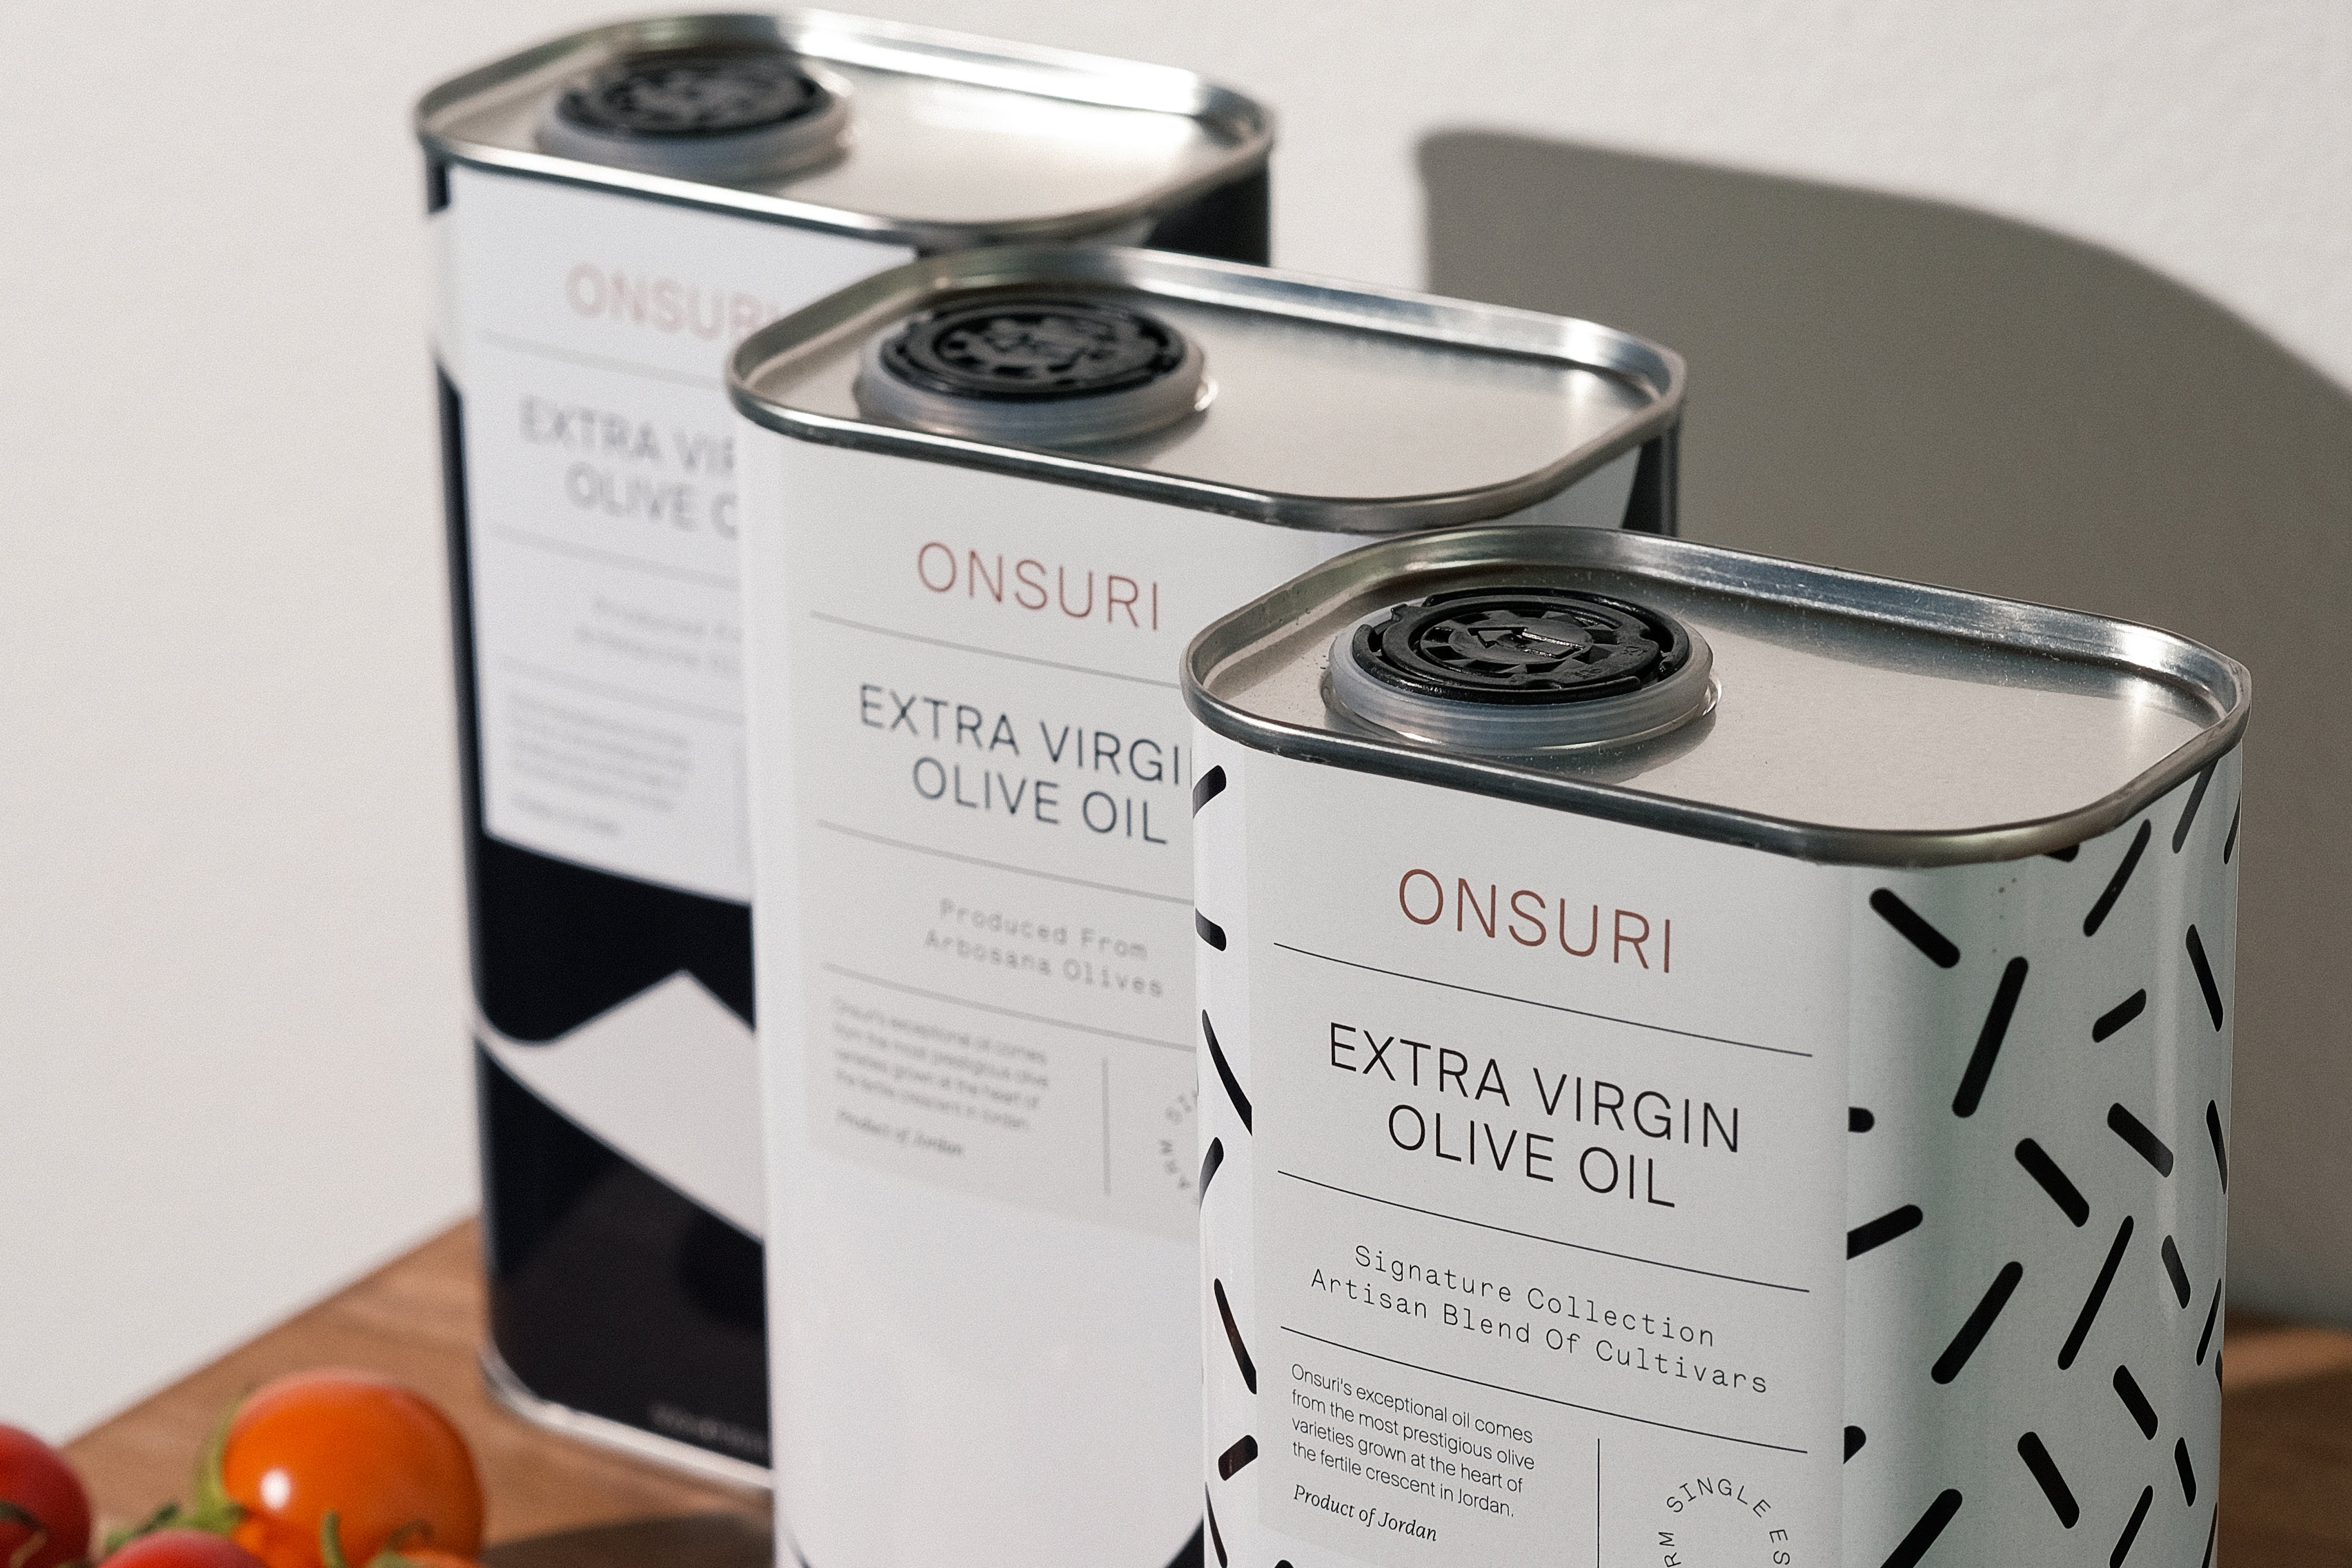 fl Oil Extra x3 - Virgin (500ml) oz - Olive Trio Lates – Onsuri Bestseller 16.9